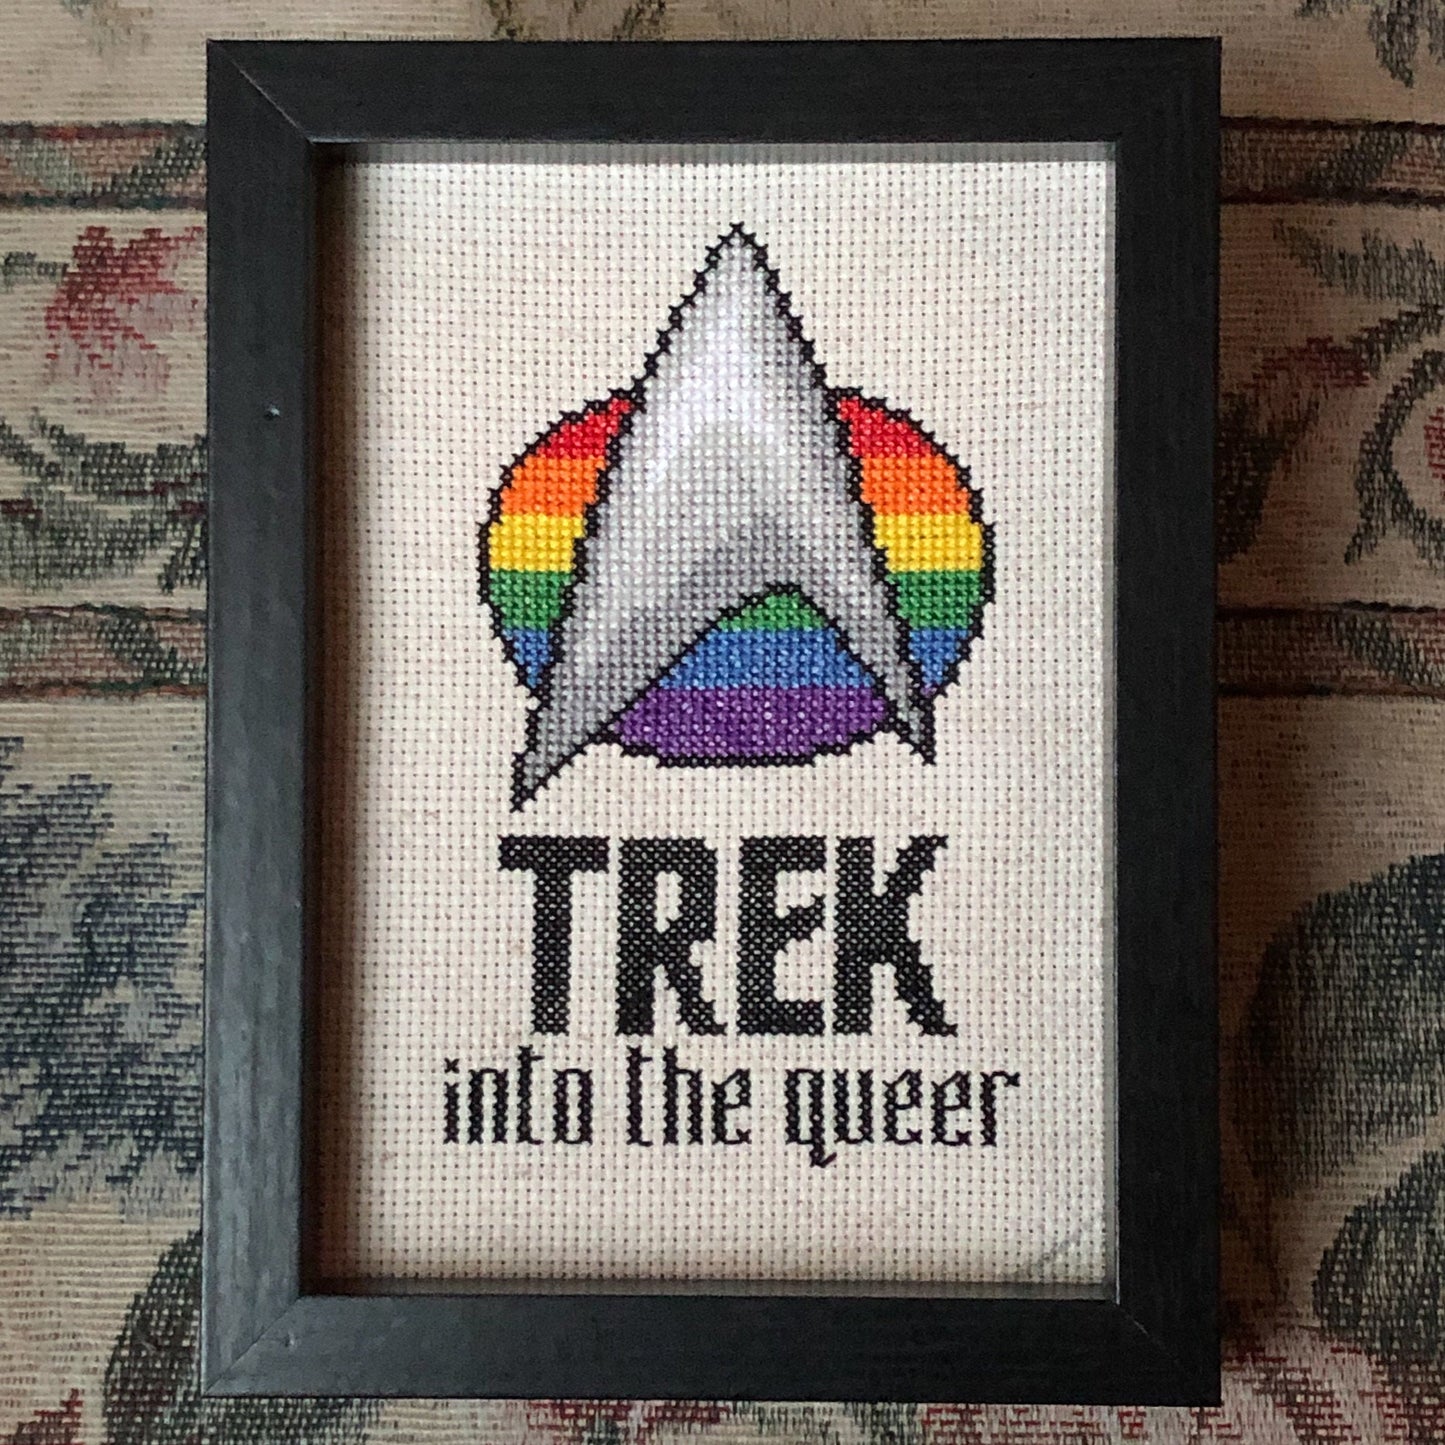 Trek into the Queer: Funny, subversive queer themed cross stitch pattern (Star Trek parody) Instant download Star Fleet insignia comm badge